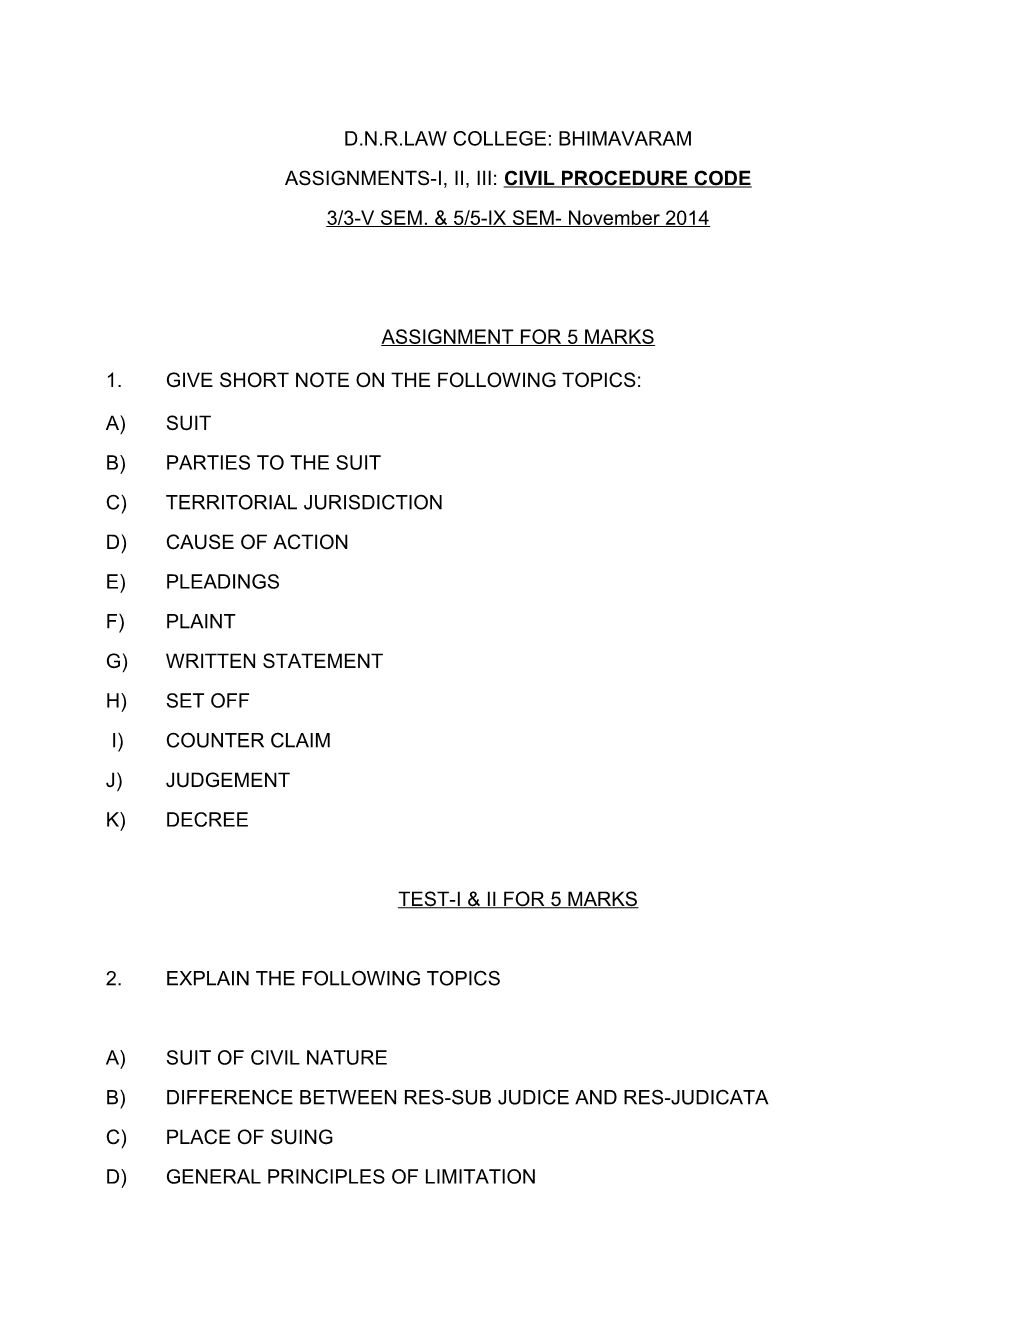 Assignments-I, Ii, Iii: Civil Procedure Code